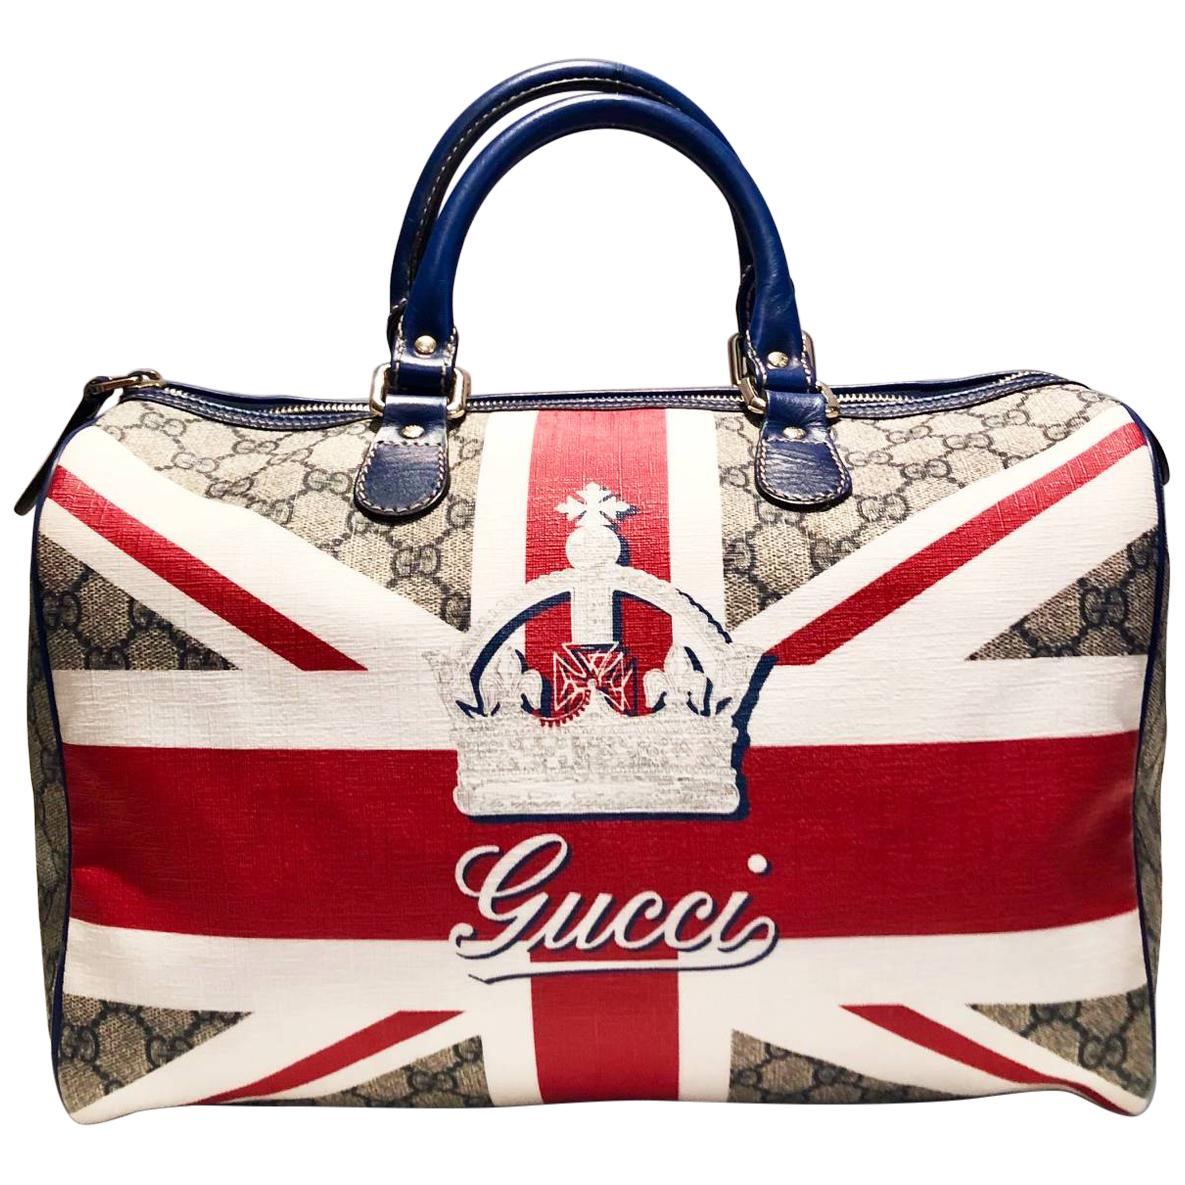 Limited Edition Gucci Union Jack Sloane Bag, 2009 